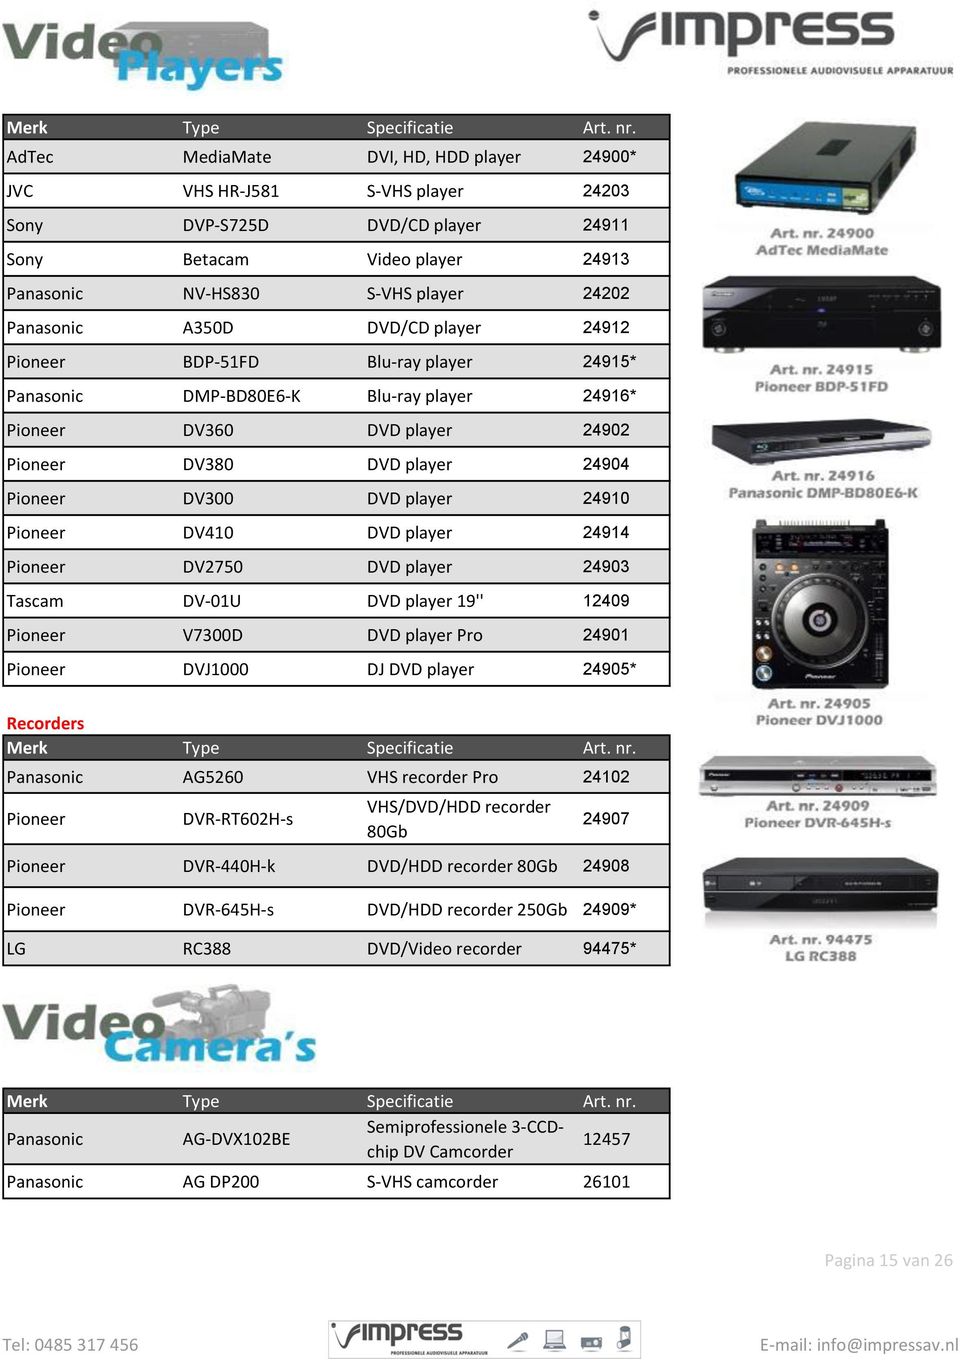 Pioneer DV410 DVD player 24914 Pioneer DV2750 DVD player 24903 Tascam DV-01U DVD player 19'' 12409 Pioneer V7300D DVD player Pro 24901 Pioneer DVJ1000 DJ DVD player 24905* Recorders Panasonic AG5260